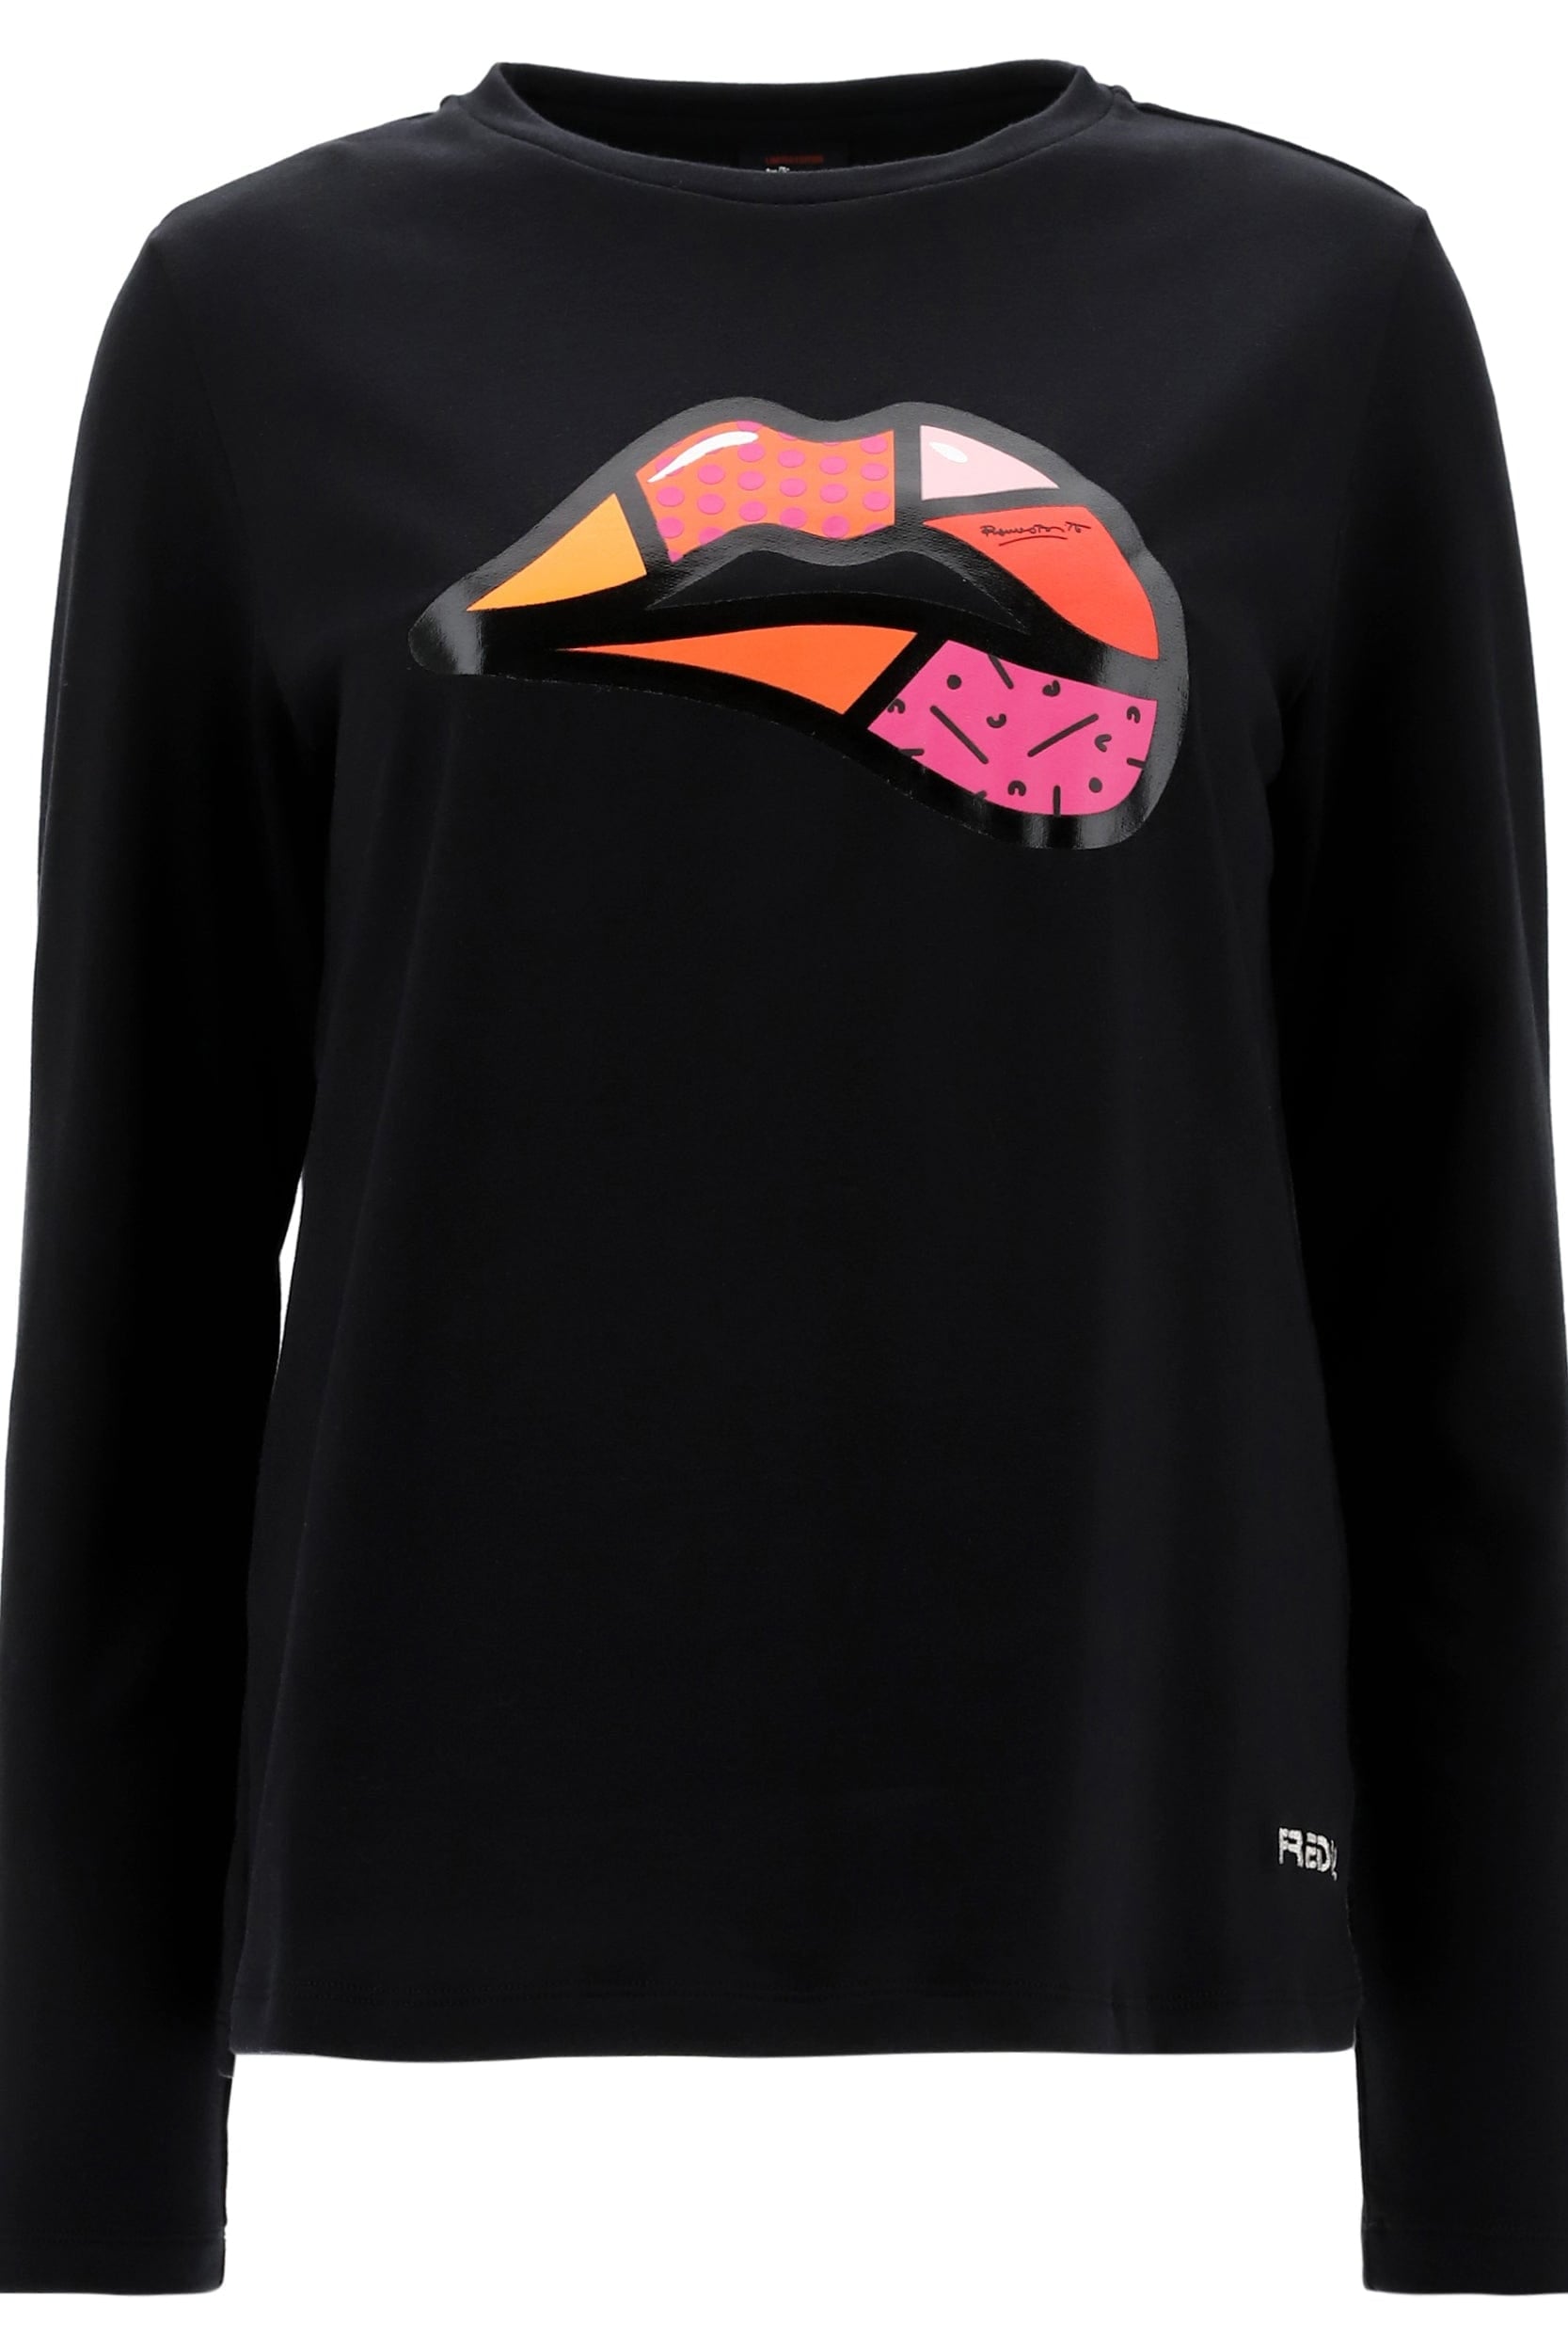 Sweatshirt with Lips - Romero Britto Collection - Black 4